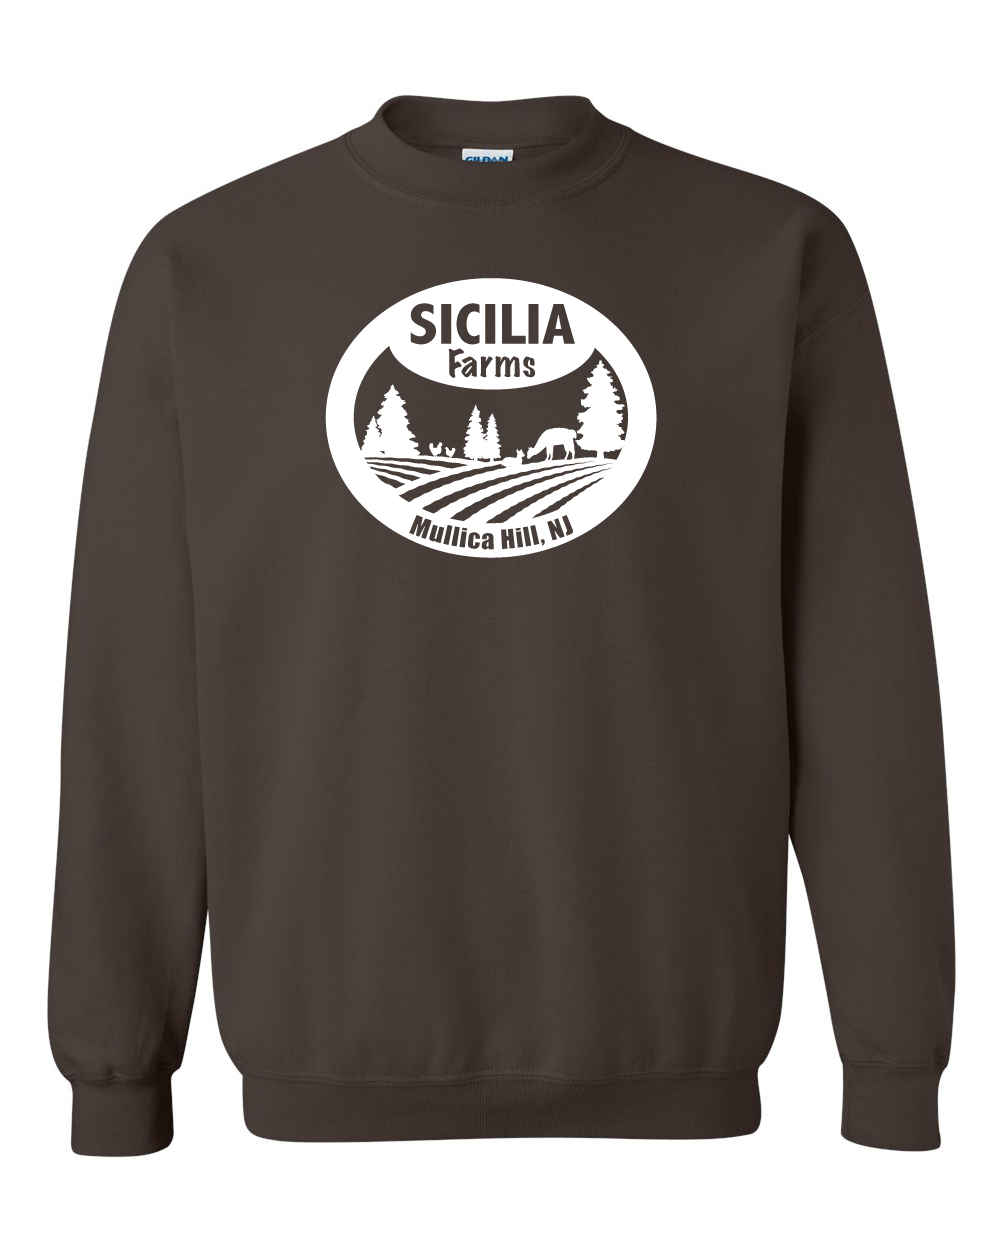 Sicilia Farms White Logo - Heavy Blend Crewneck Sweatshirt